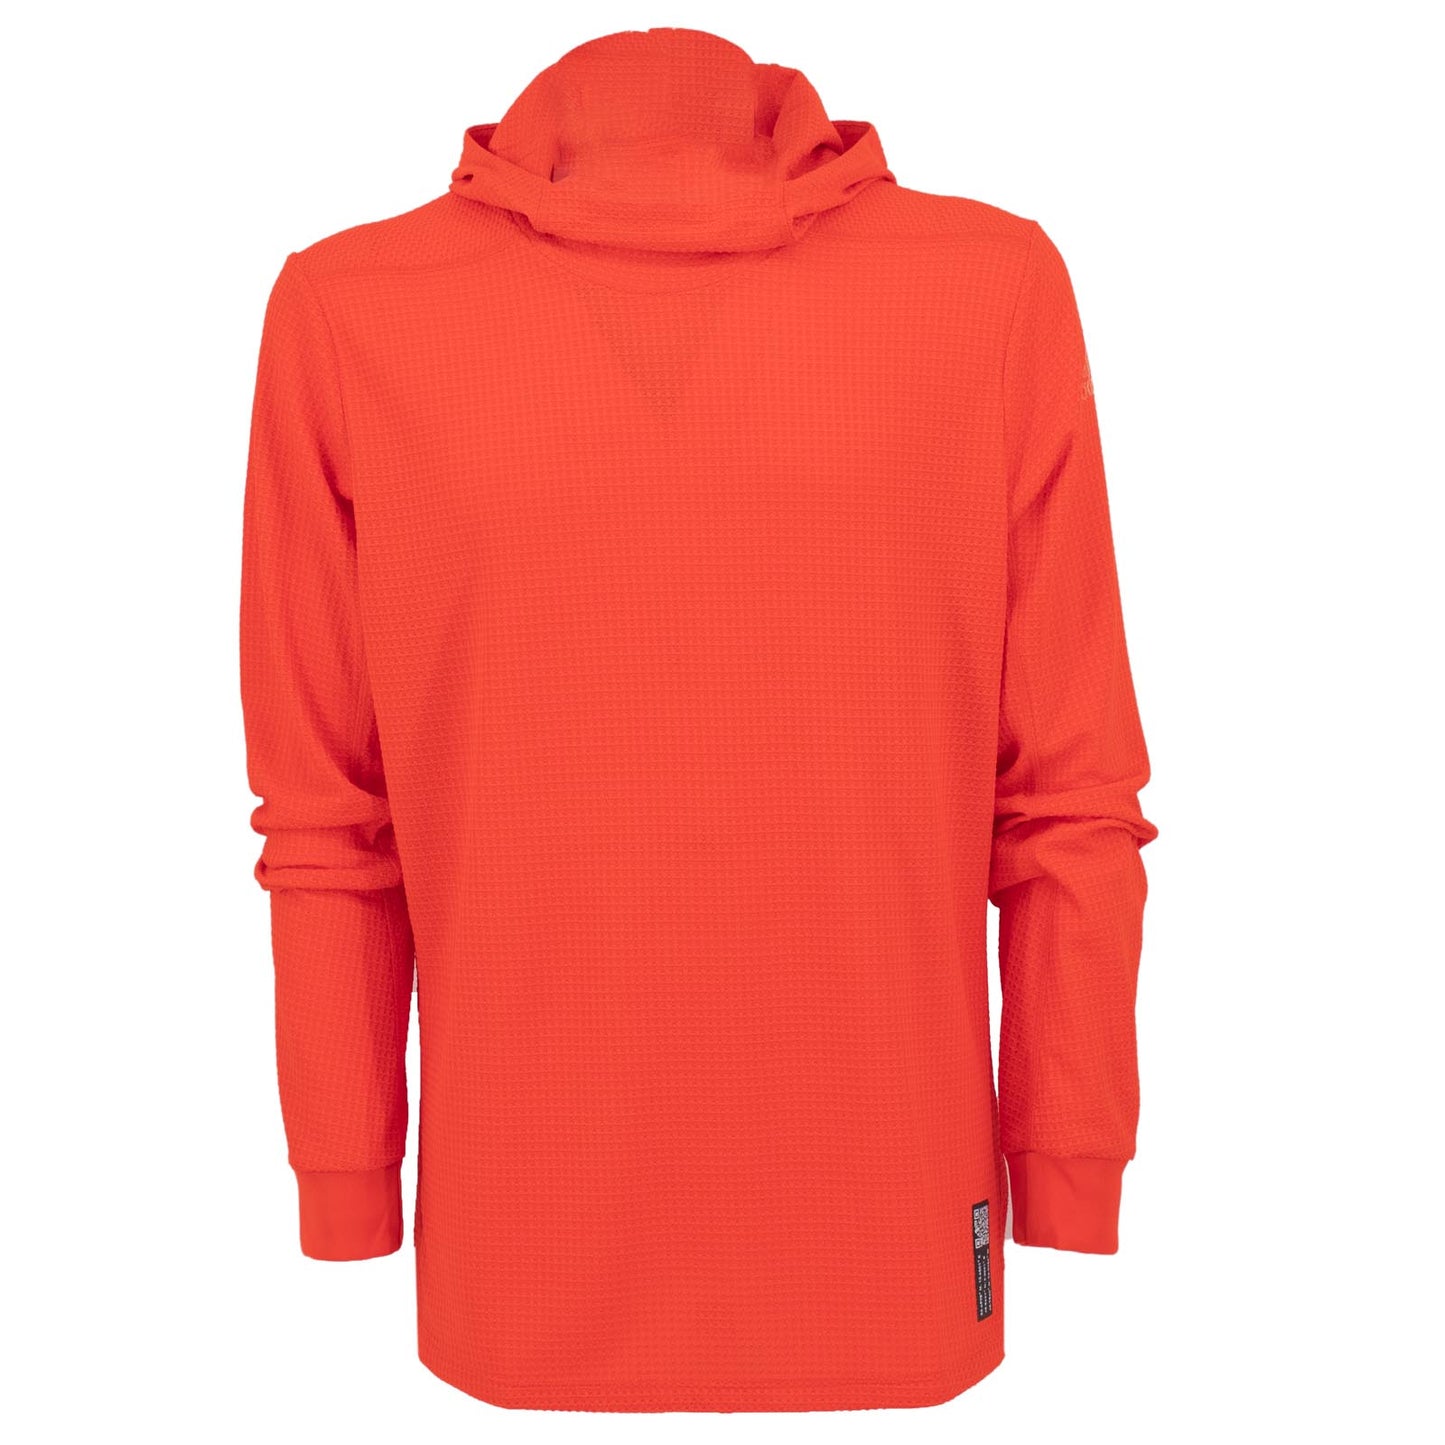 Adidas Adapt Hoodie Herren Kapuzenpullover Orange Sweatshirt Training DW4705 L